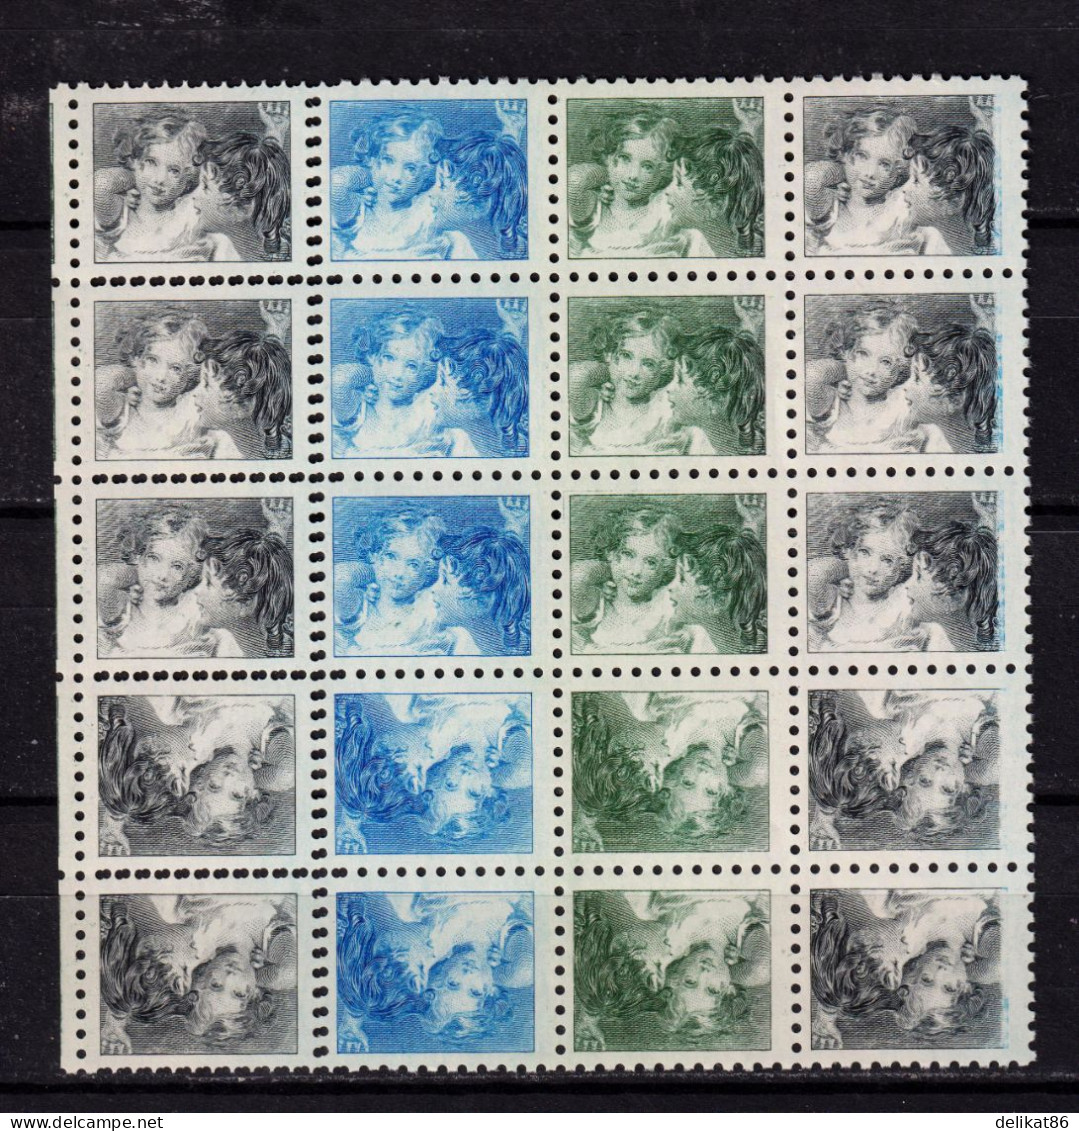 Probedruck Test Stamp Maschinprobe Specimen Canada 1935 Baby Sister - Essais & Réimpressions